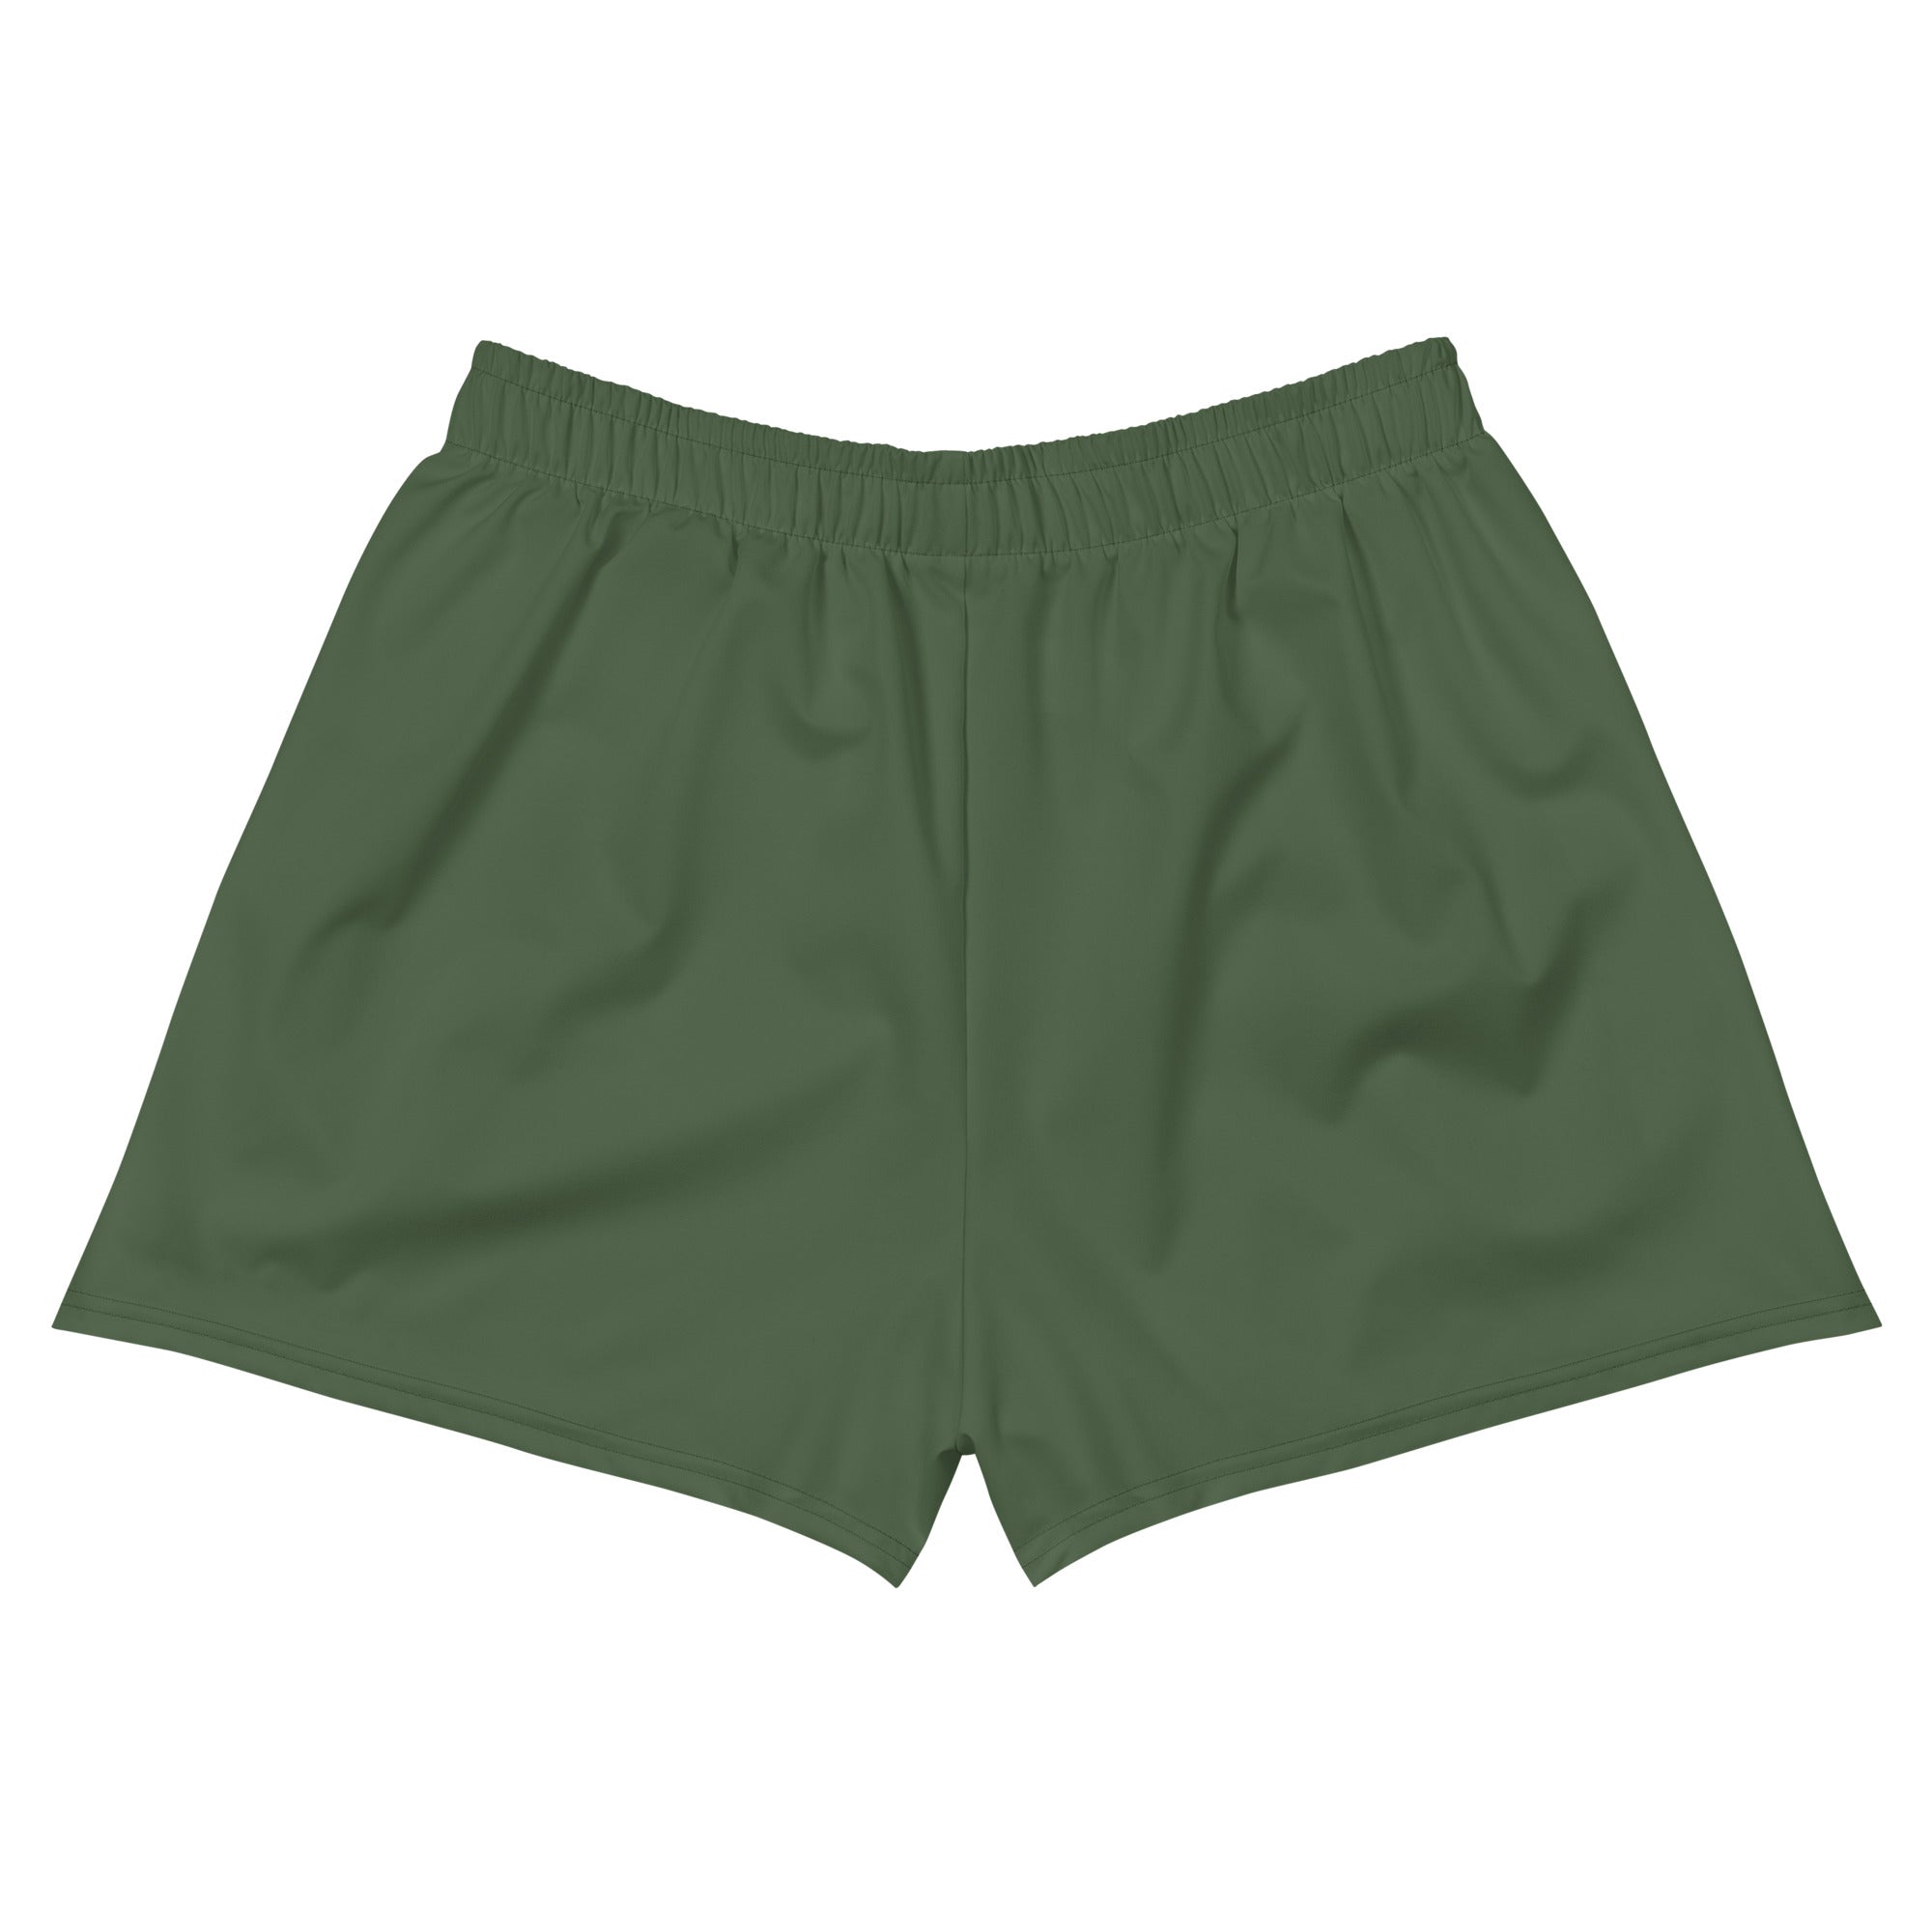 Recycelte Sport-Shorts für Damen khaki - earlyfish